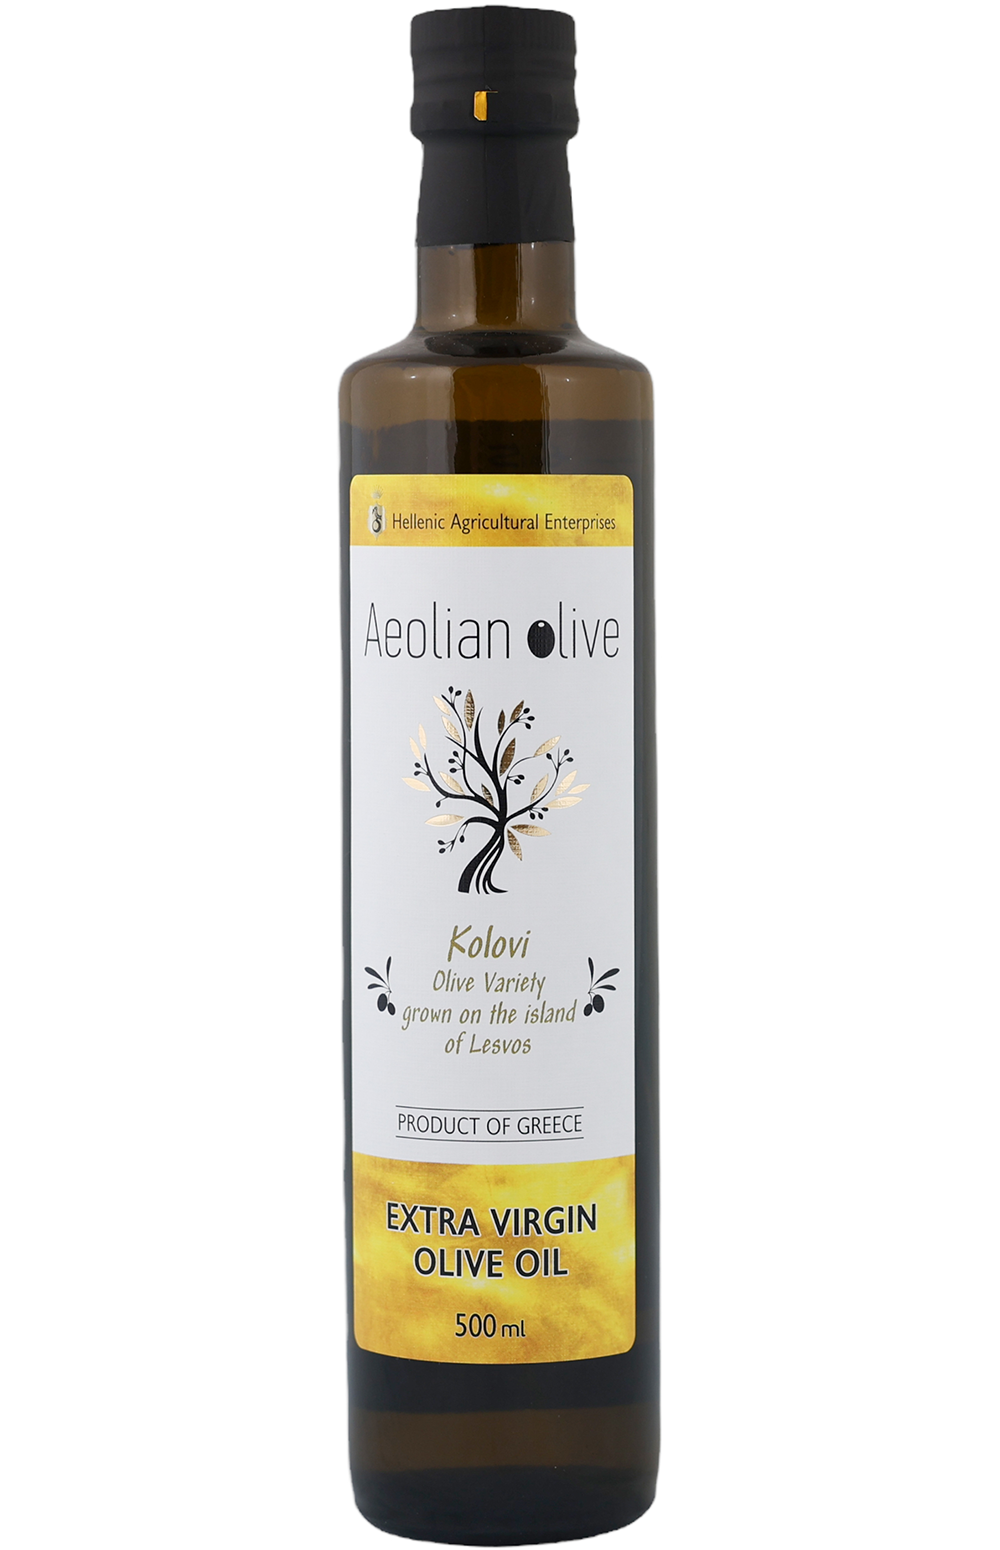 Aeolian Olive Extra Virgin Olive Oil